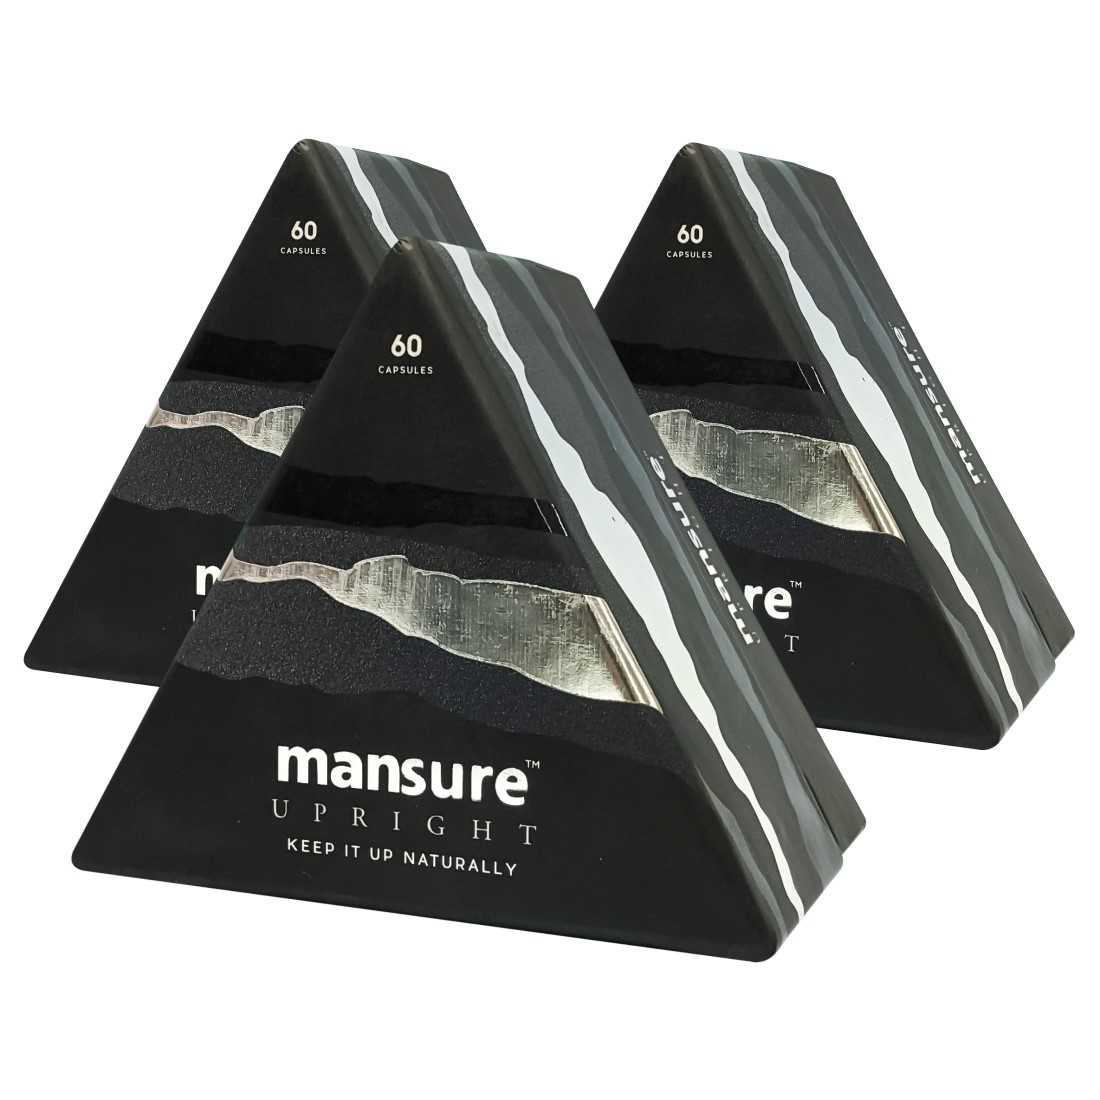 ManSure Pack of 3 ManSure UPRIGHT for Men's Health - 60 Capsules